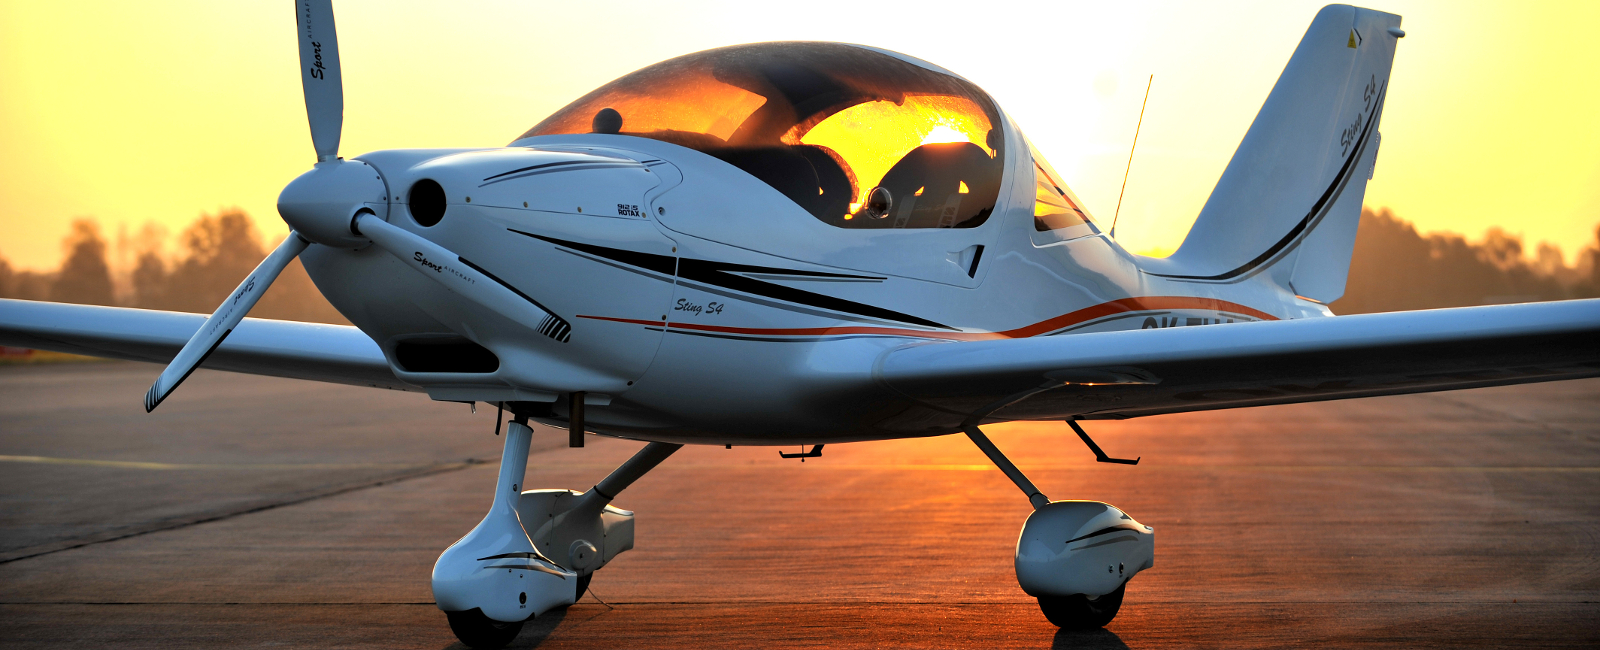 TL Ultralight Aircraft for sale - Winglist